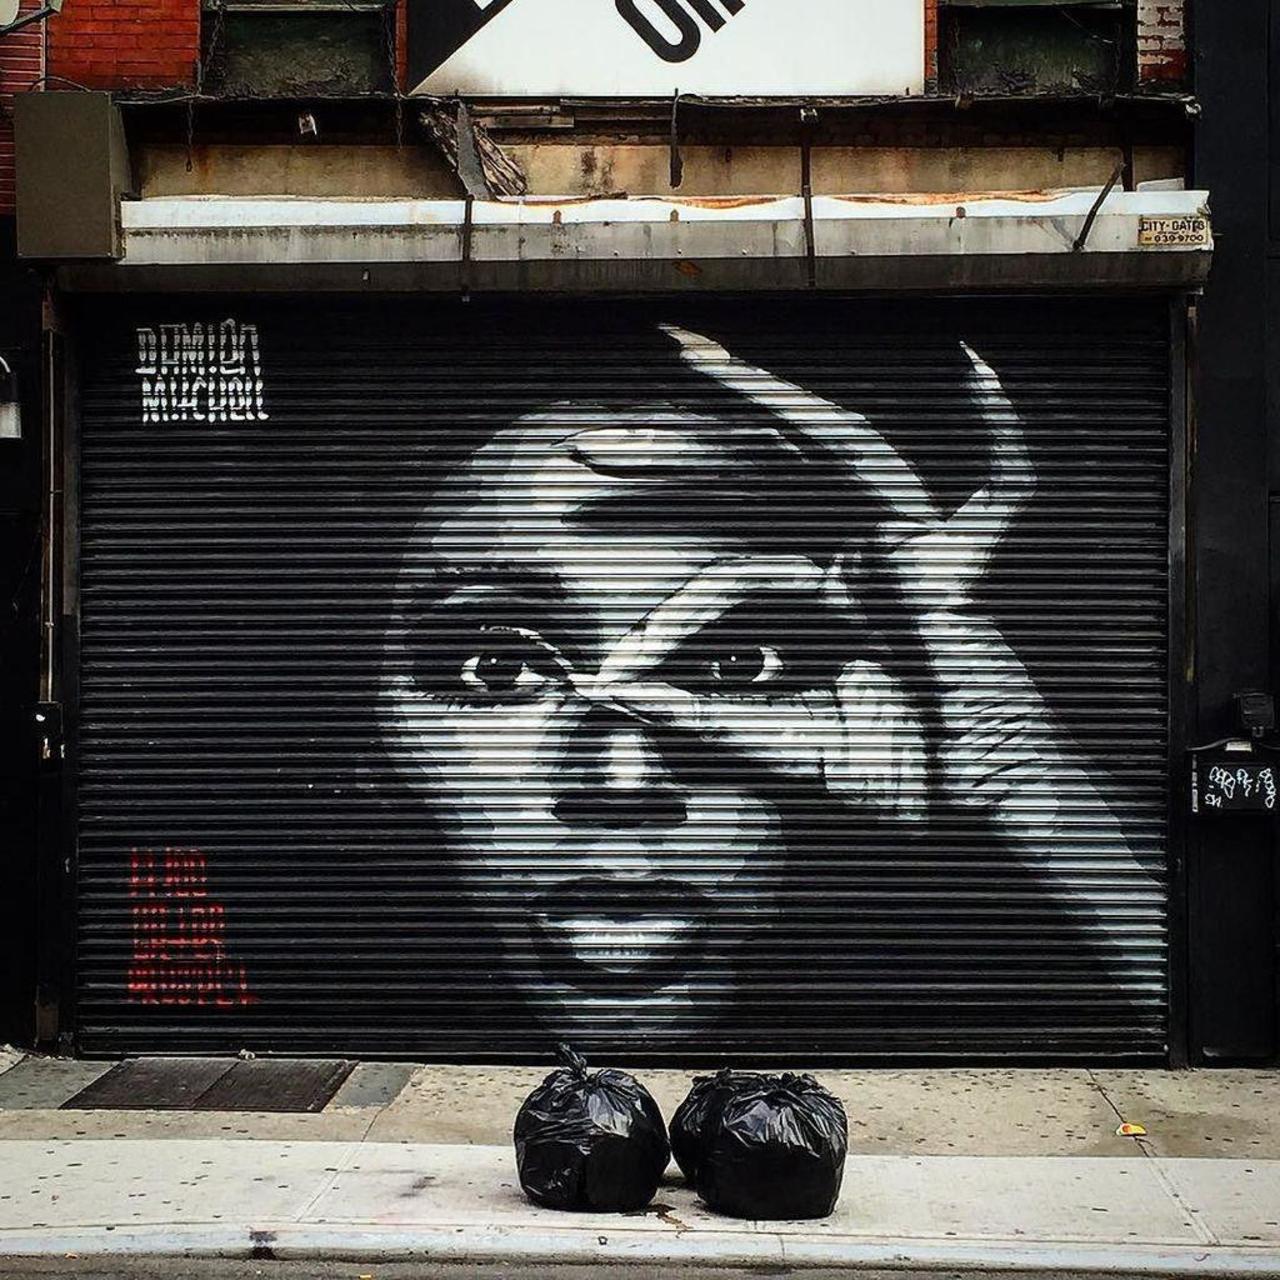 Lower East Side shutters... #graffiti #stencilart #art #streetart #wallporn #wall #pasteup #mural #urbanwalls #stre… http://t.co/JgkjhA4vaI